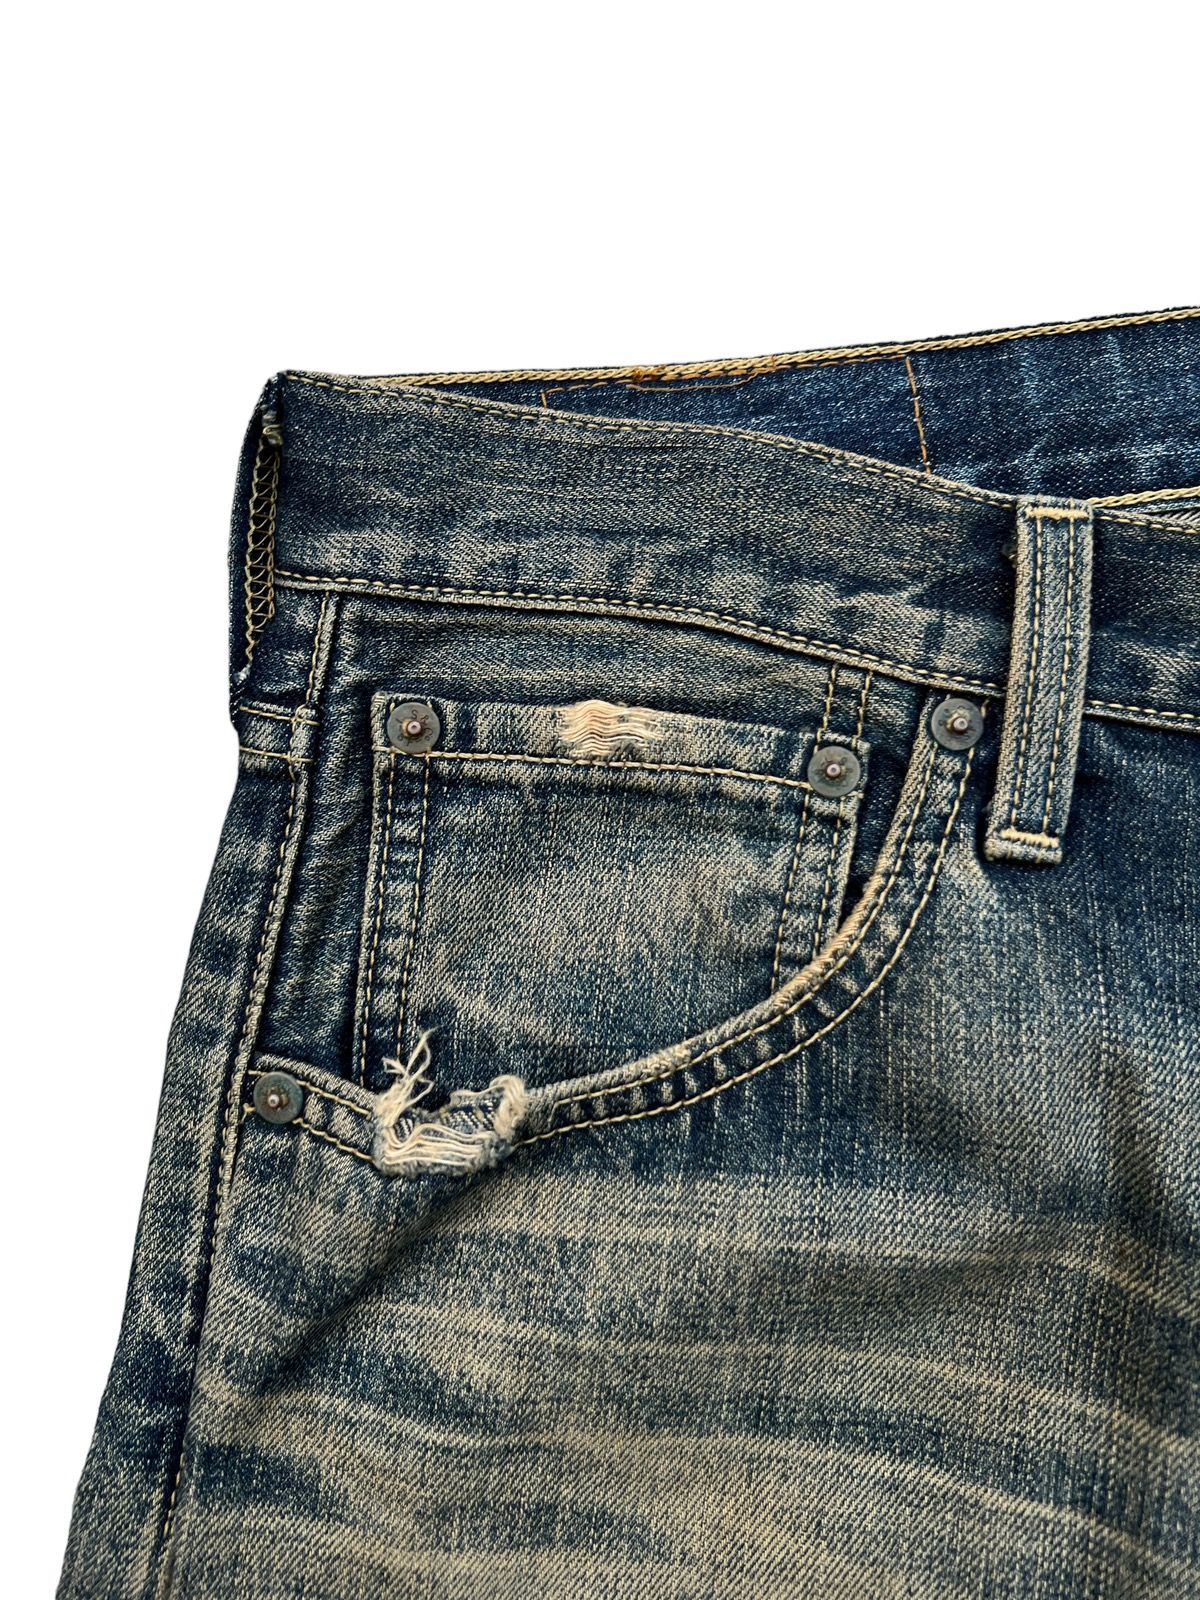 Vintage Levi’s 503 Distressed Rusty Denim Jeans 30x32 - 11